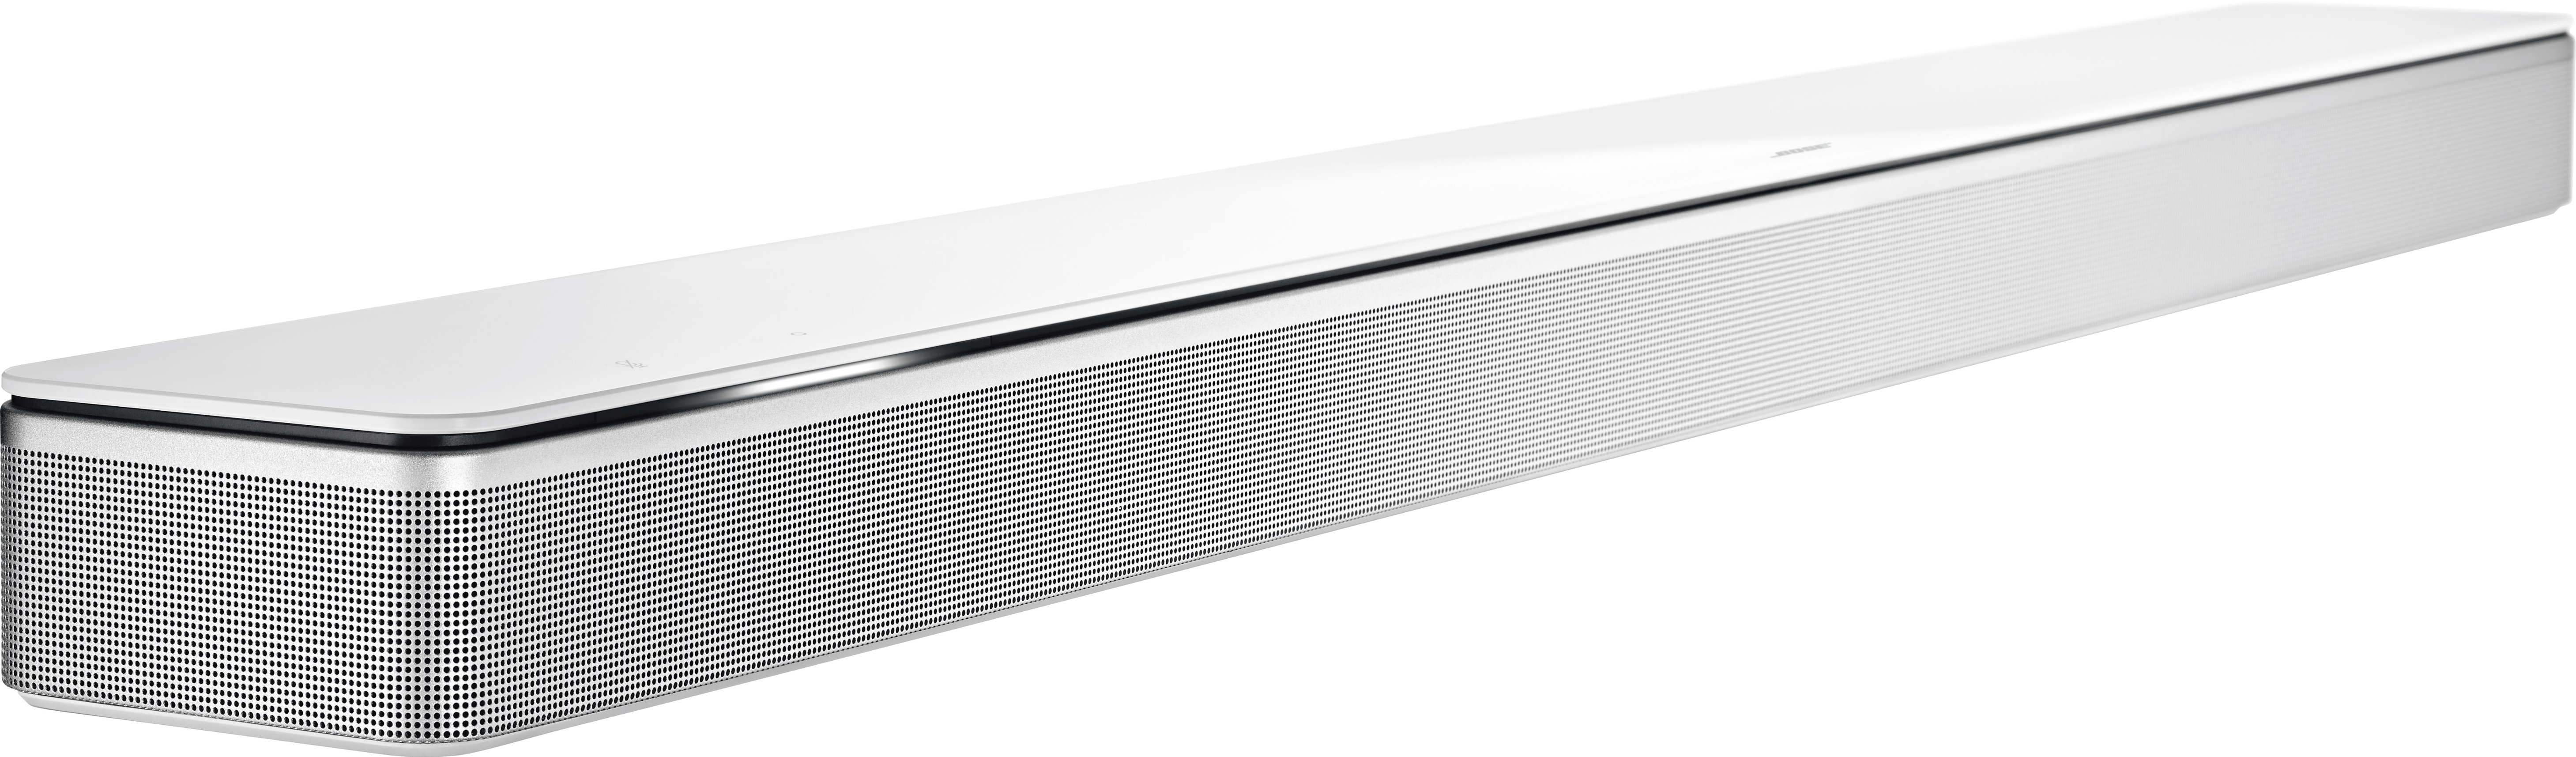 Angle View: Bose - Smart Soundbar 700 with Voice Assistant - Artic White